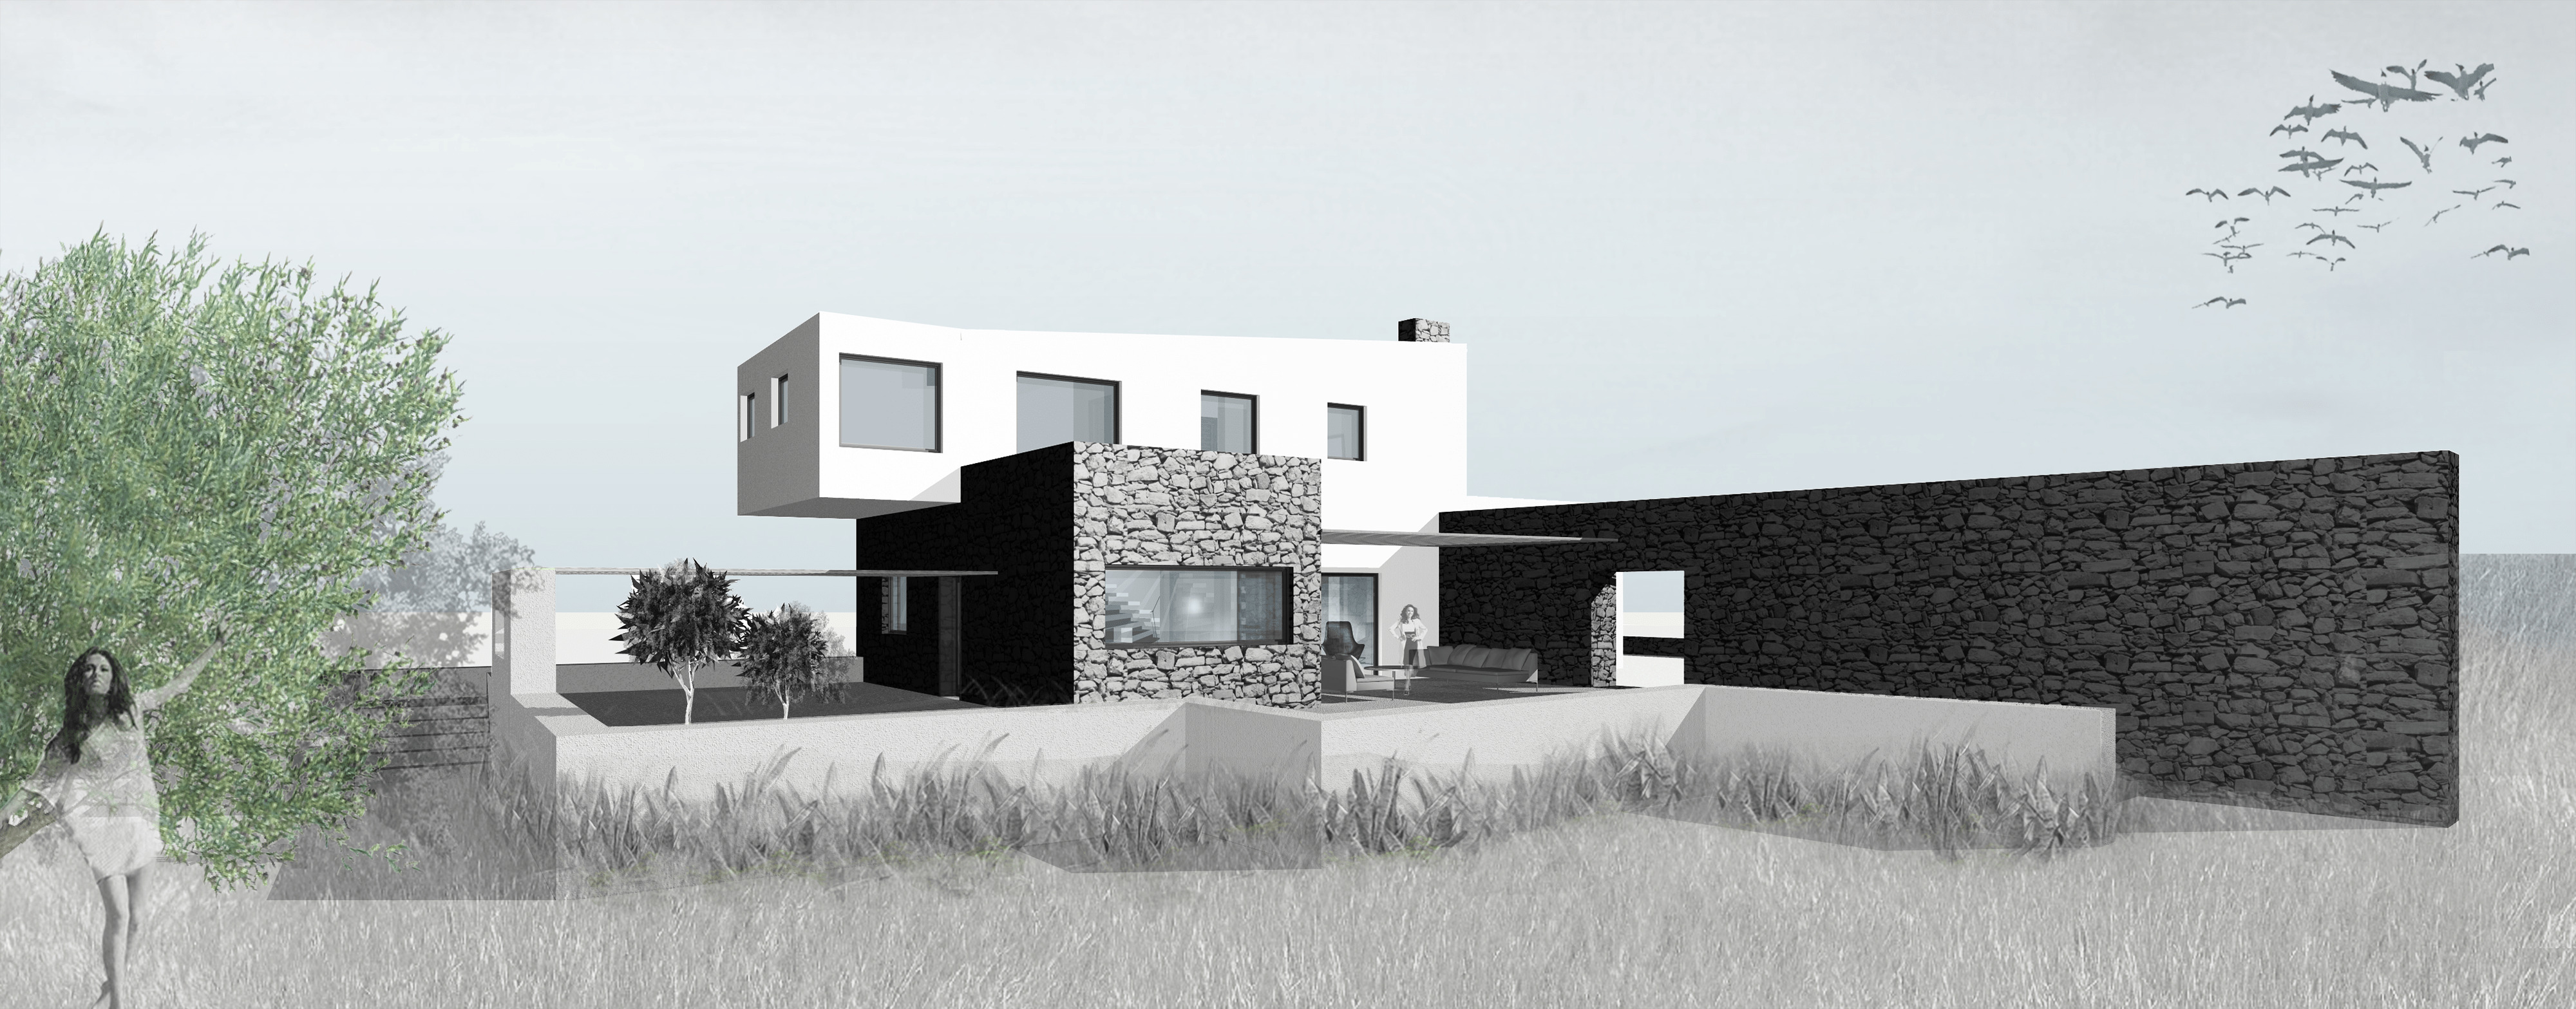 Evripiotis Architects--Open View House, Peloponnese